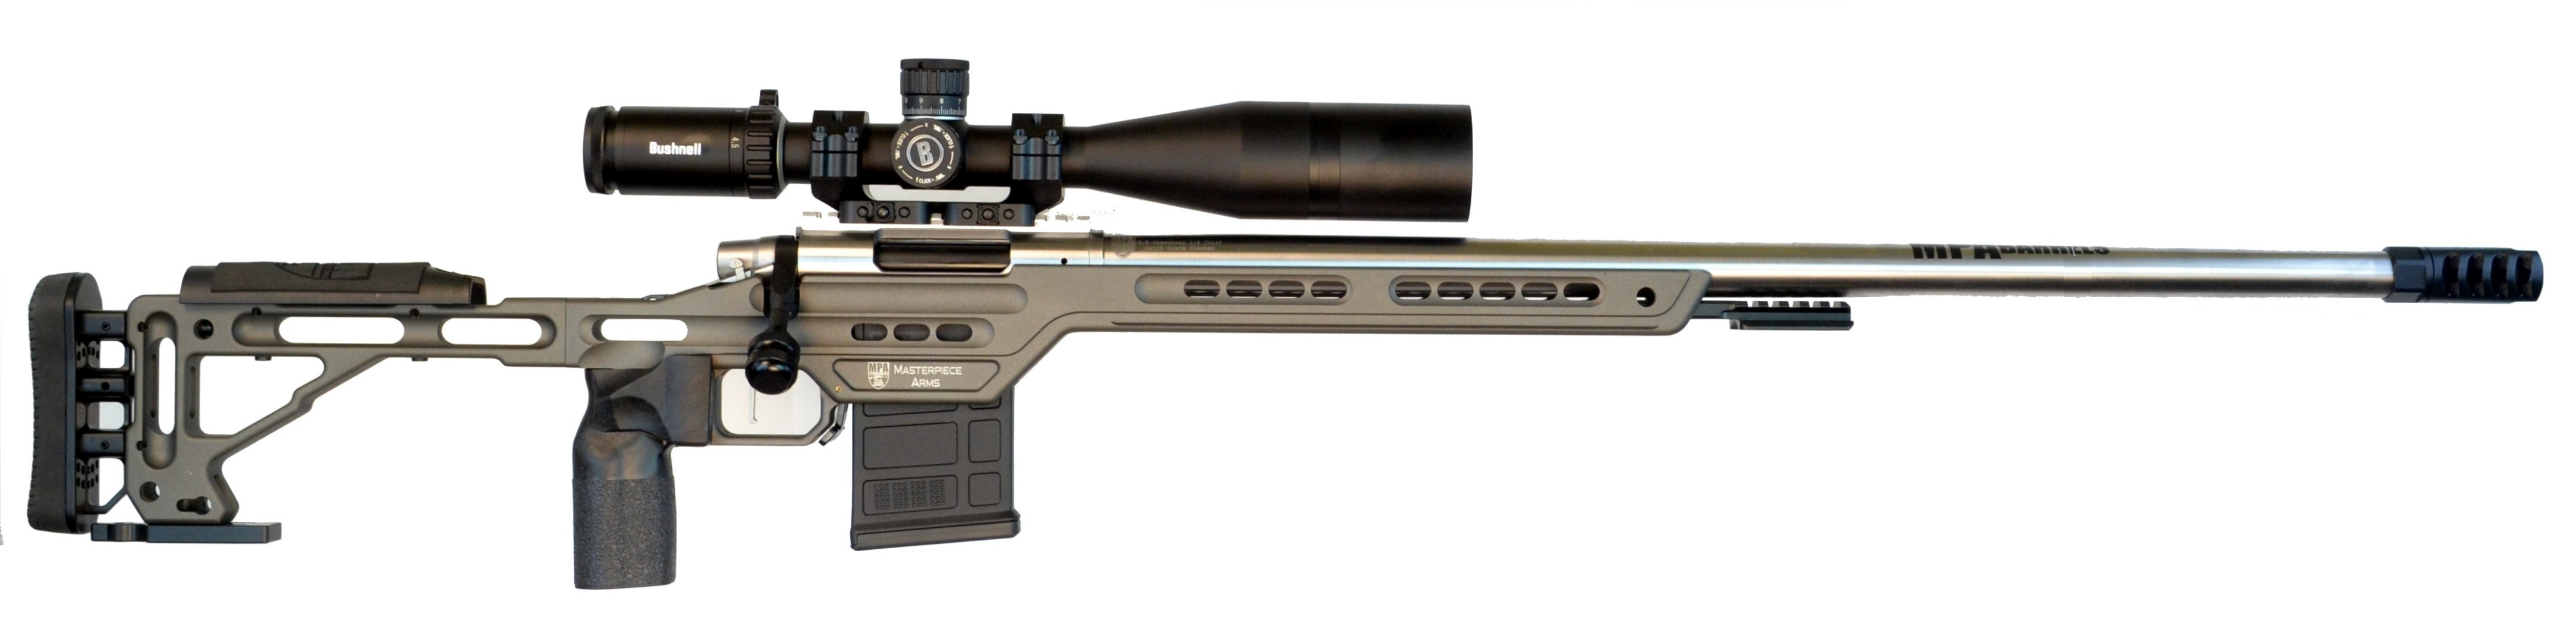 MasterPiece Arms (MPA) Introduces the MPA BA Precision Match Rifle (PMR